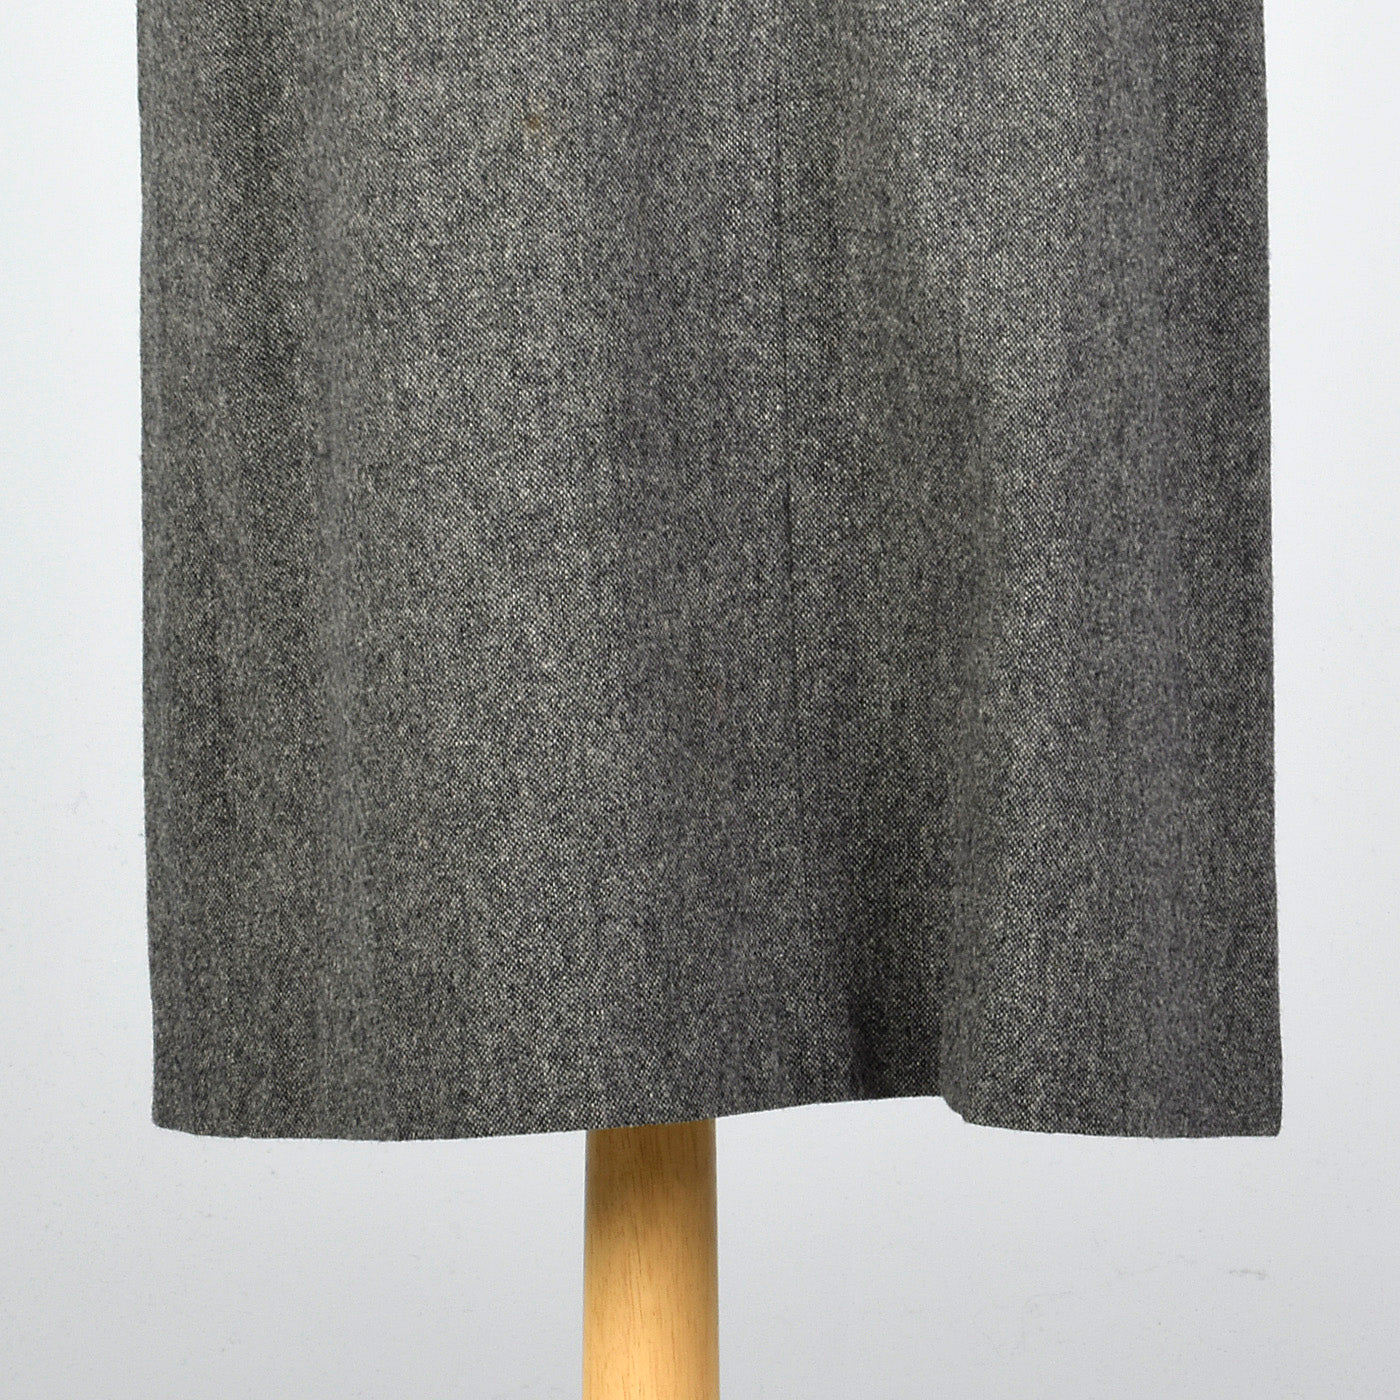 1950s Classic Gray Tweed Skirt Suit